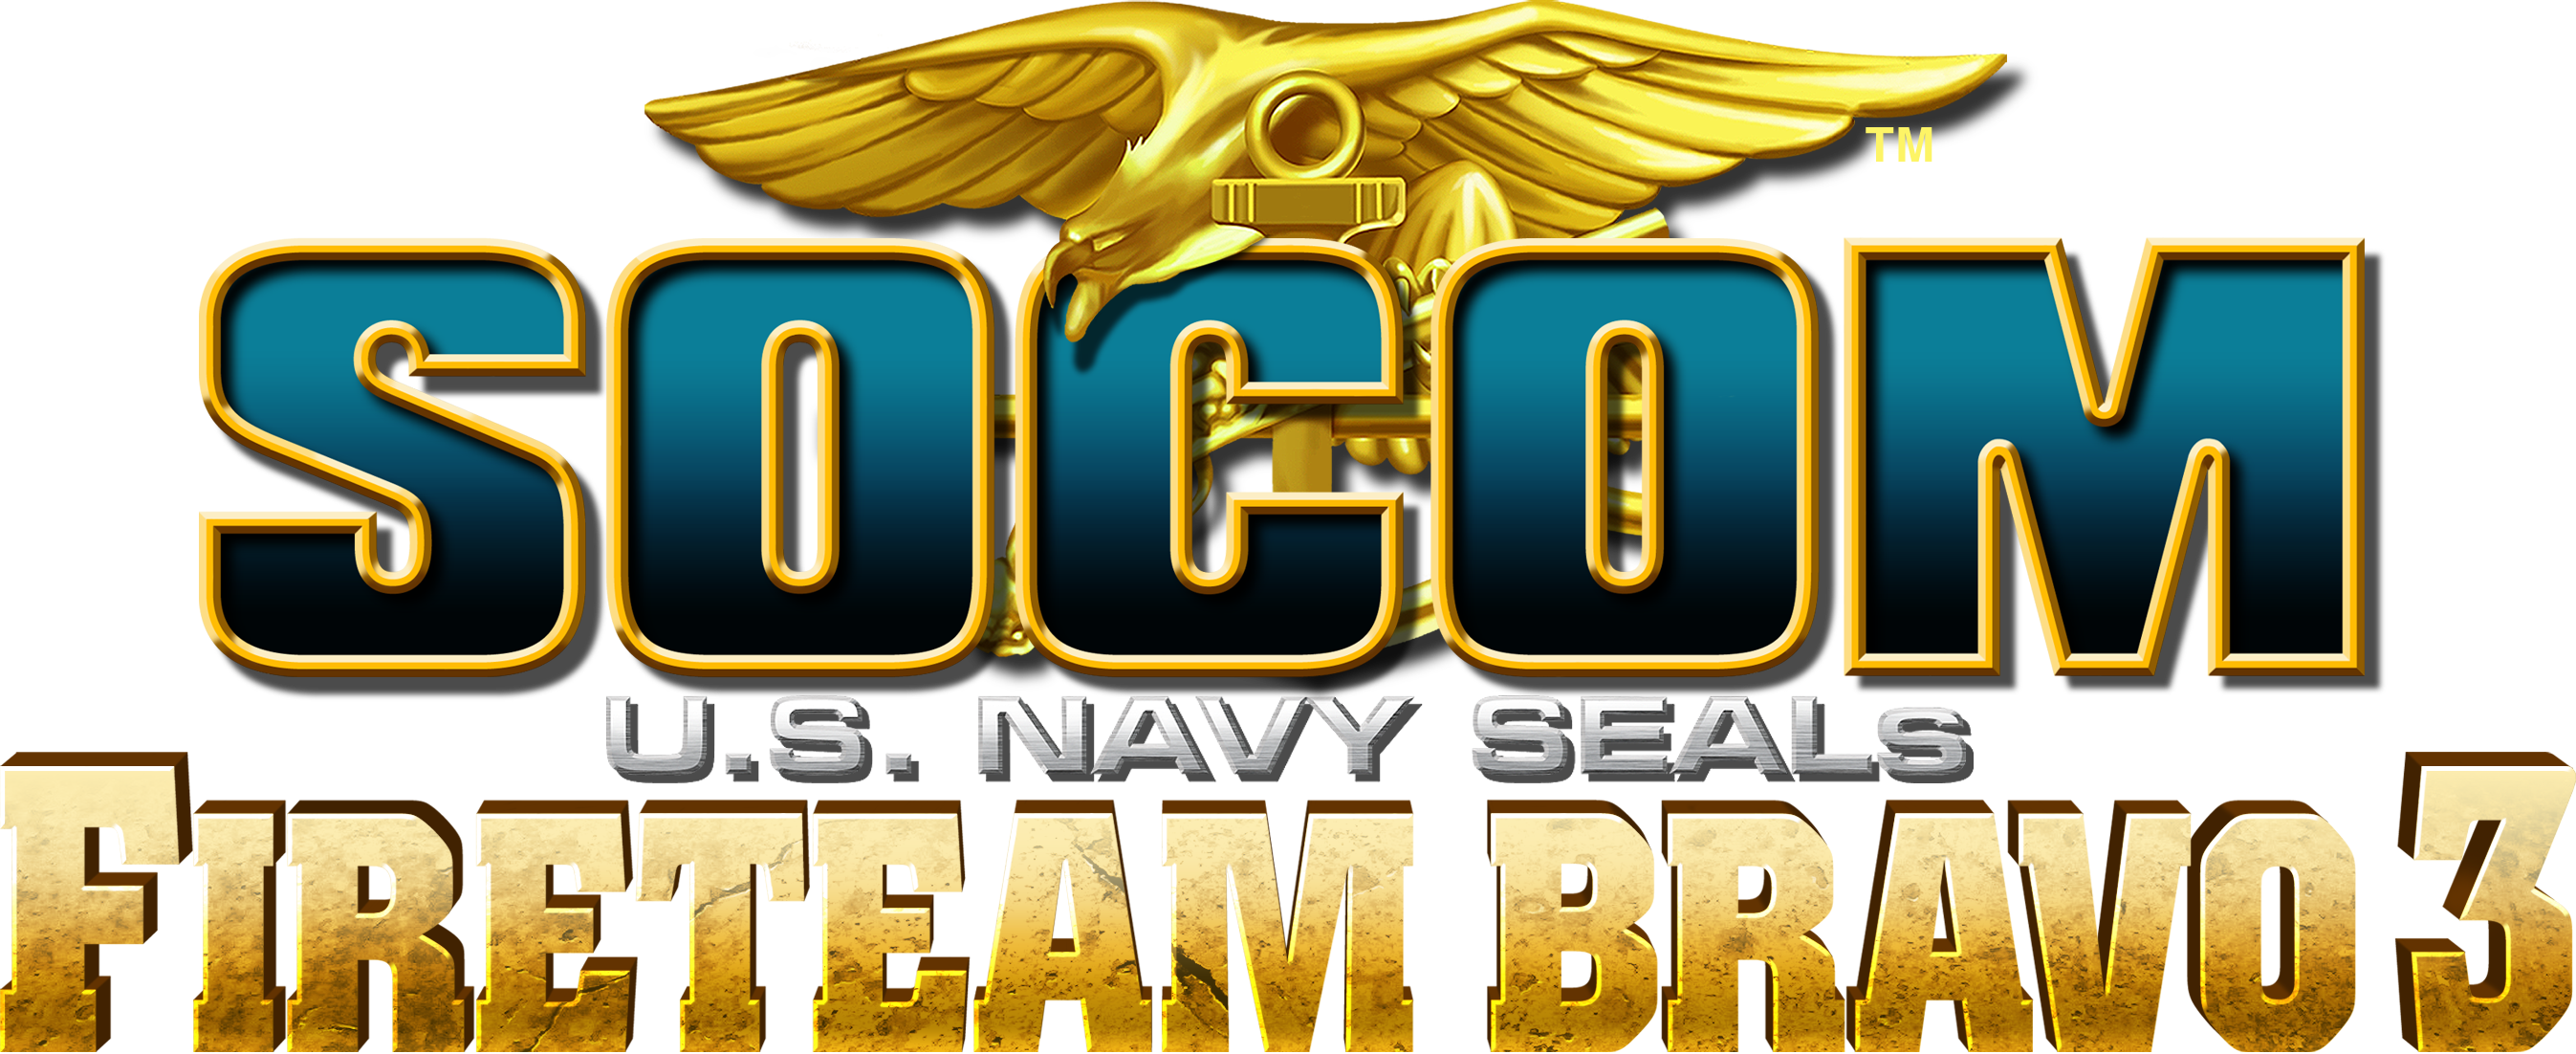 Co-Optimus - Screens - SOCOM: Fireteam Bravo 3 Screenshots Infiltrate  Co-Optimus